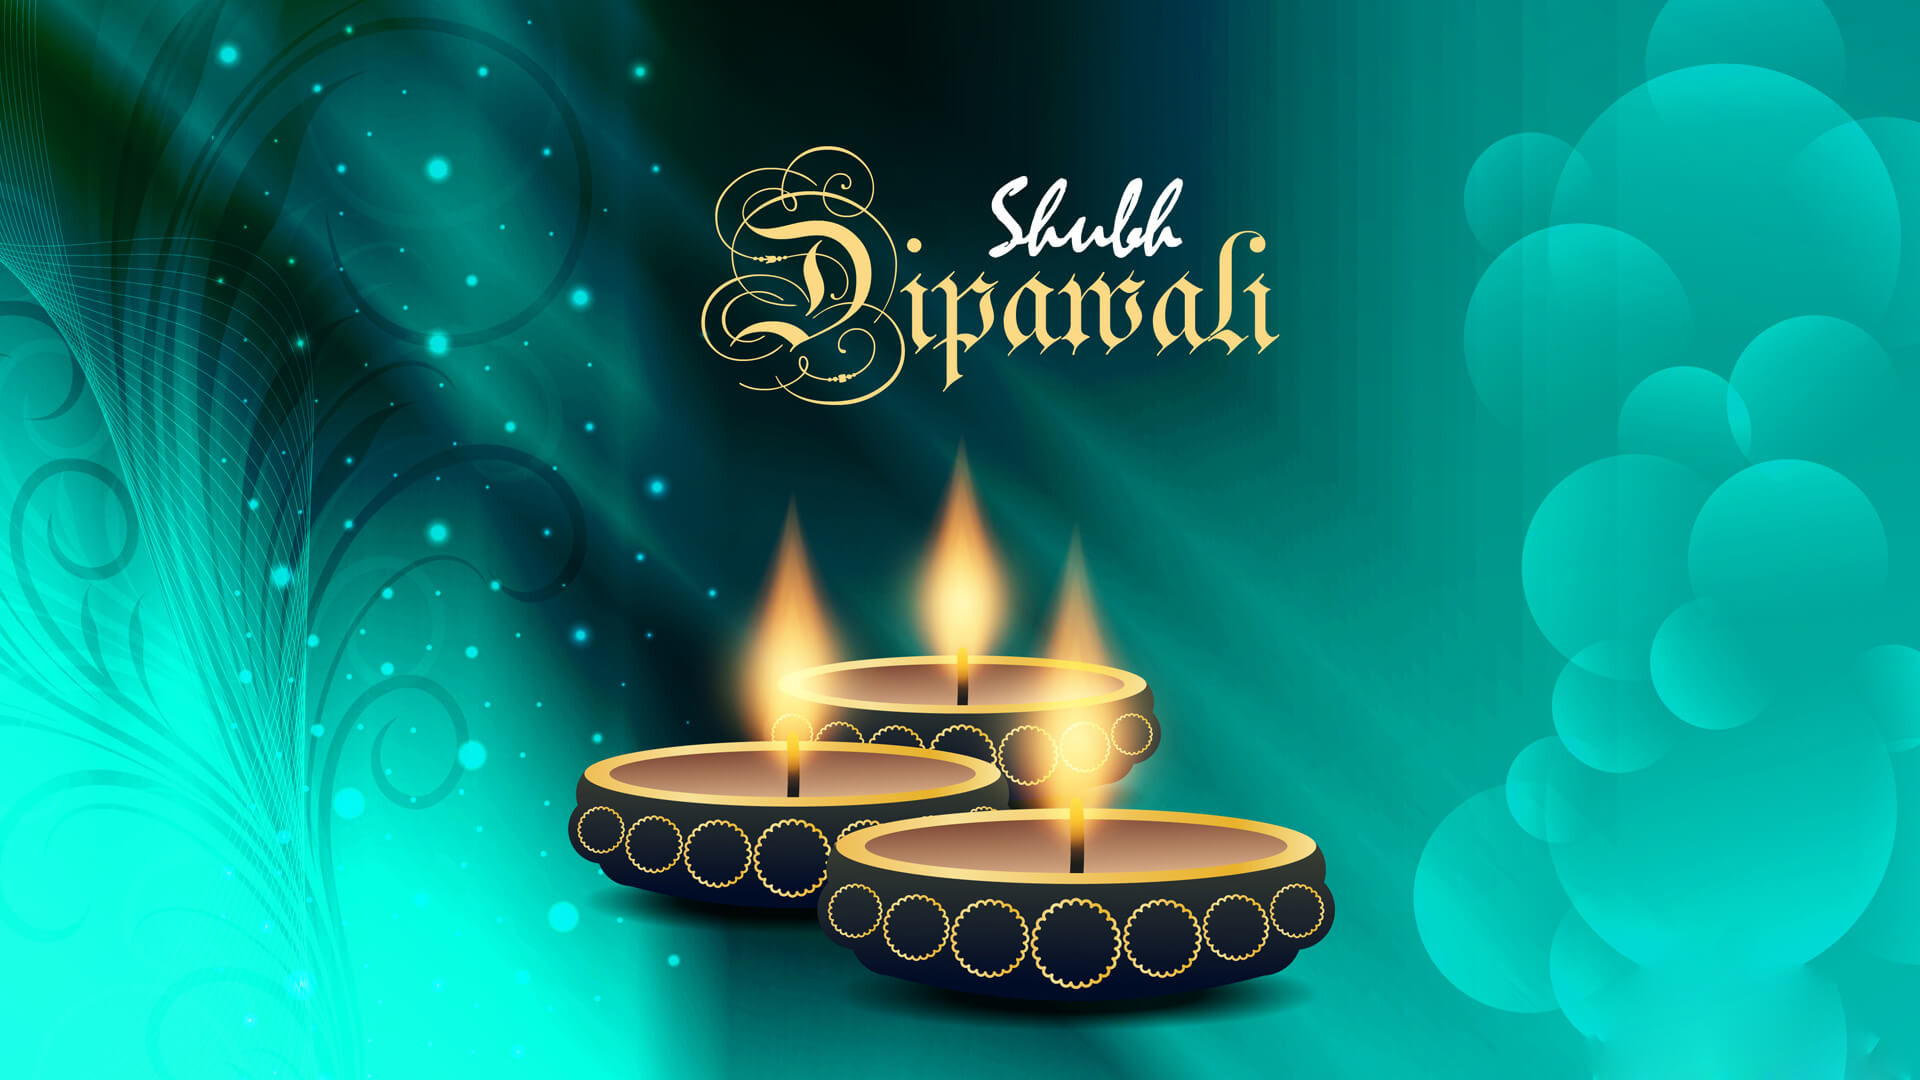 Beautiful Diwali Wallpaper For Your Desktop Mobile And Tablet